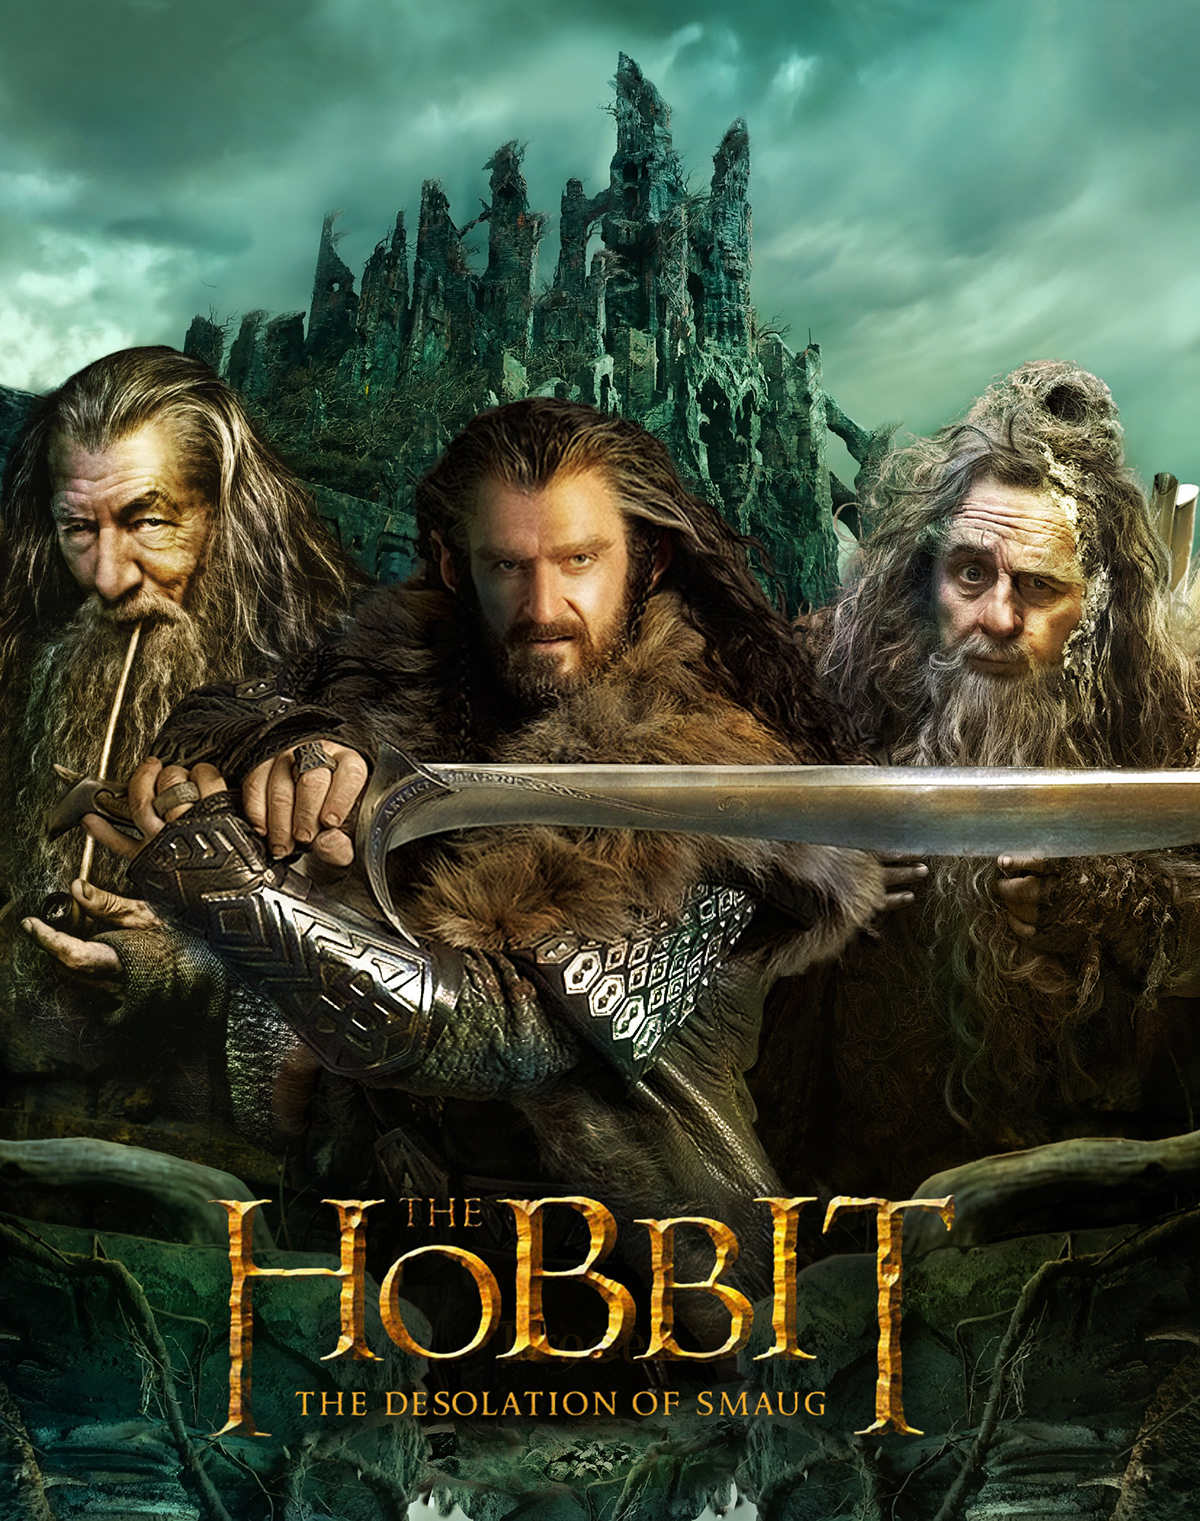 the hobbit the Desolation Of Smaug the Hobbit hobbit the hobbit an accept journey LOTR gandalf radagast legolas thorin